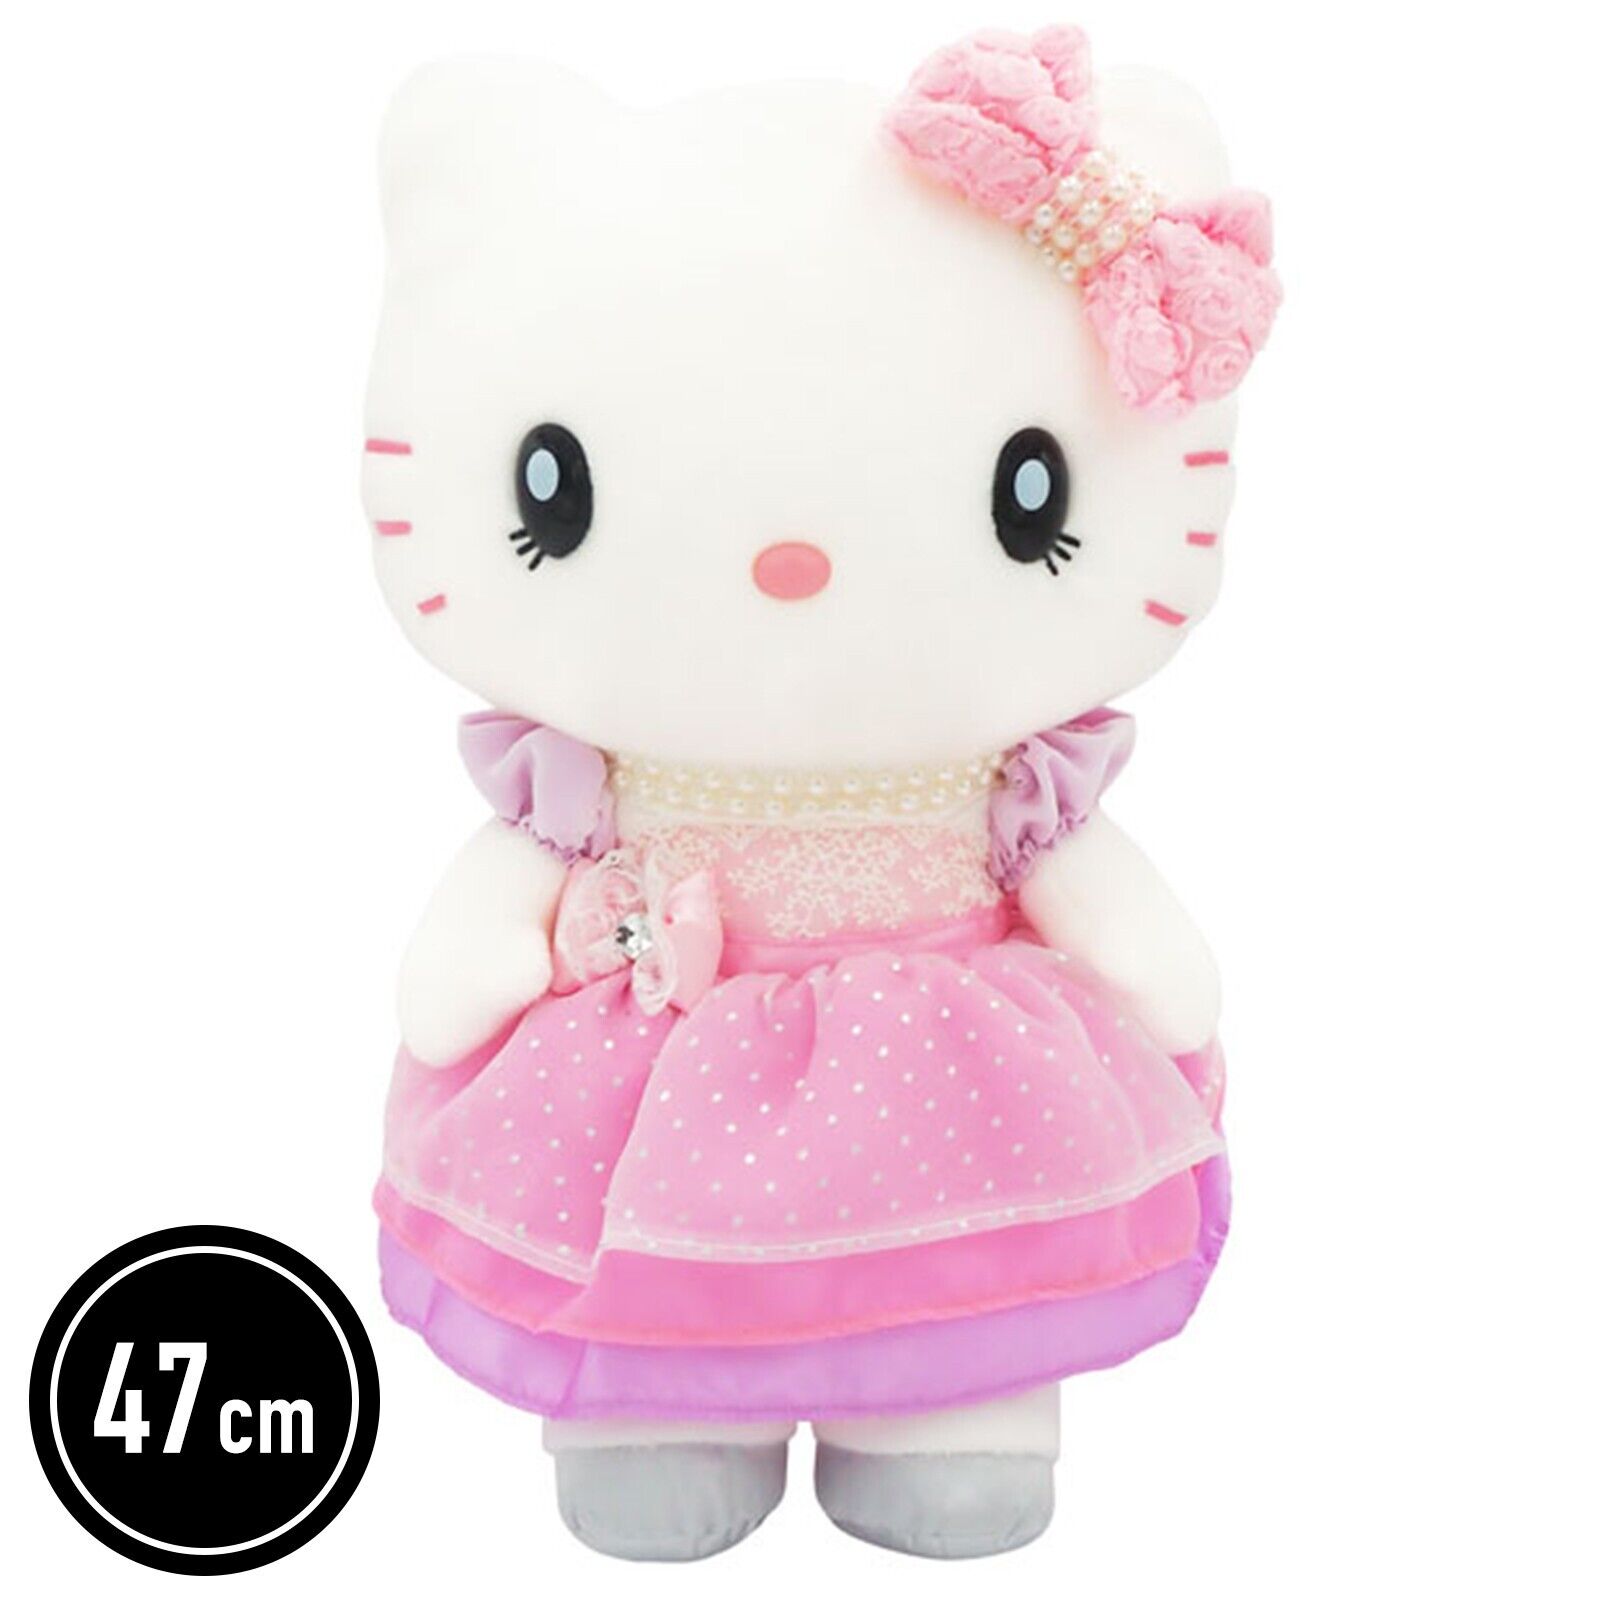 USJ Universal Studios Japan Hello Kitty Plush Doll Stuffed Toy L Large Pink New